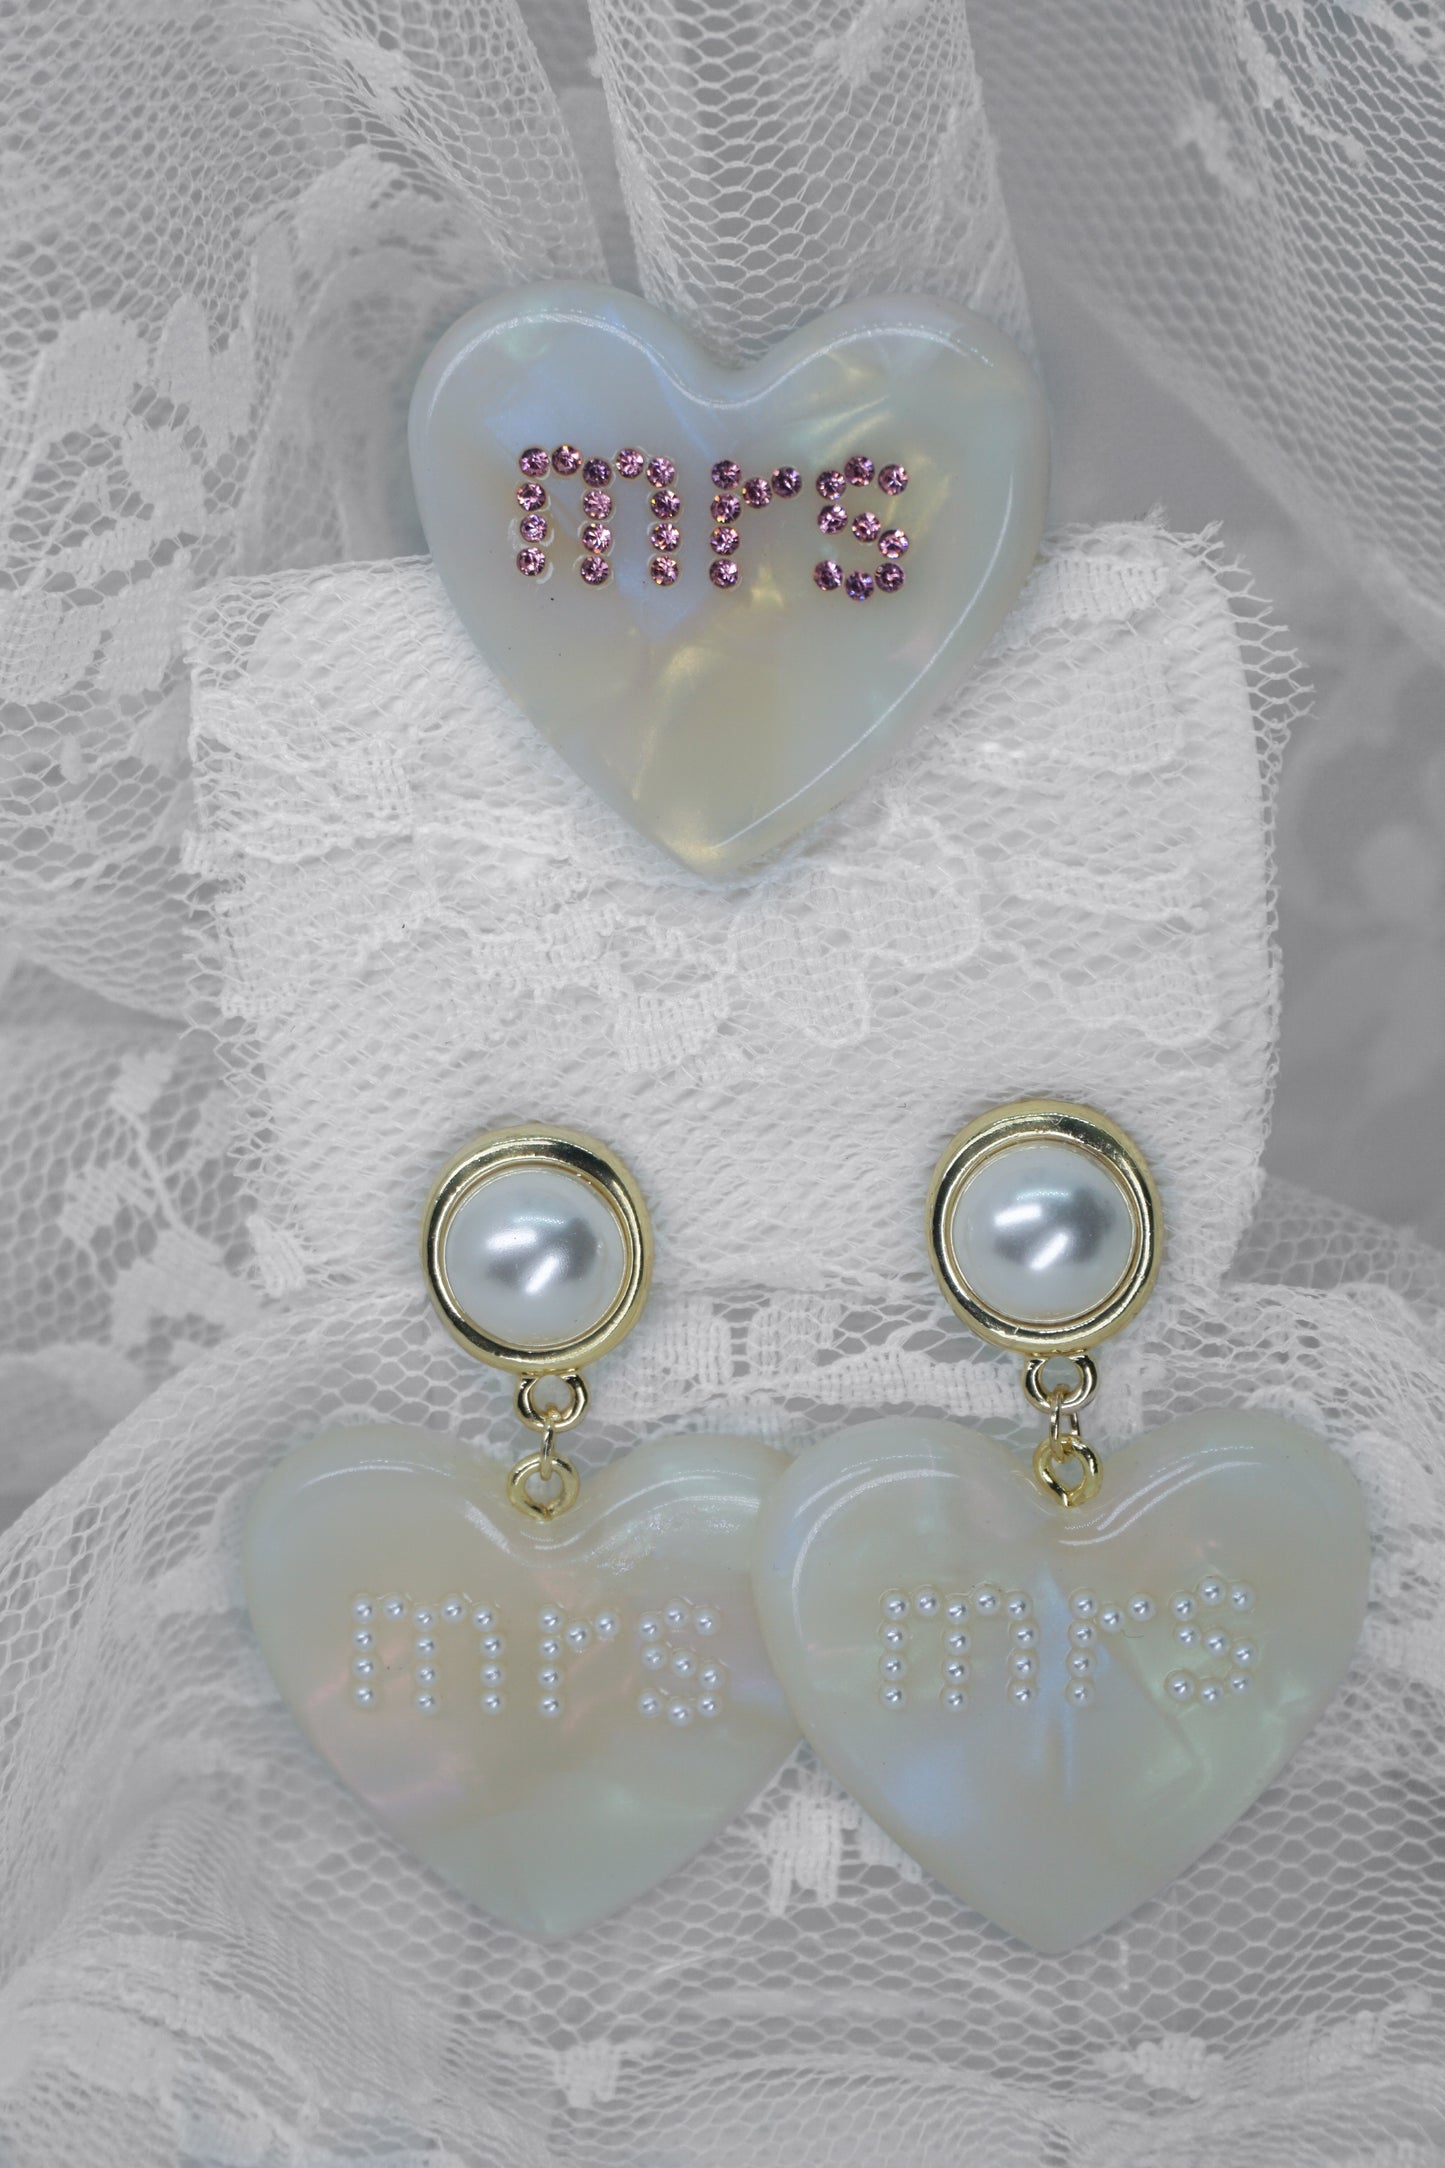 Mrs Mother of Pearl Earrings + 1 Heart Hair Clip Set